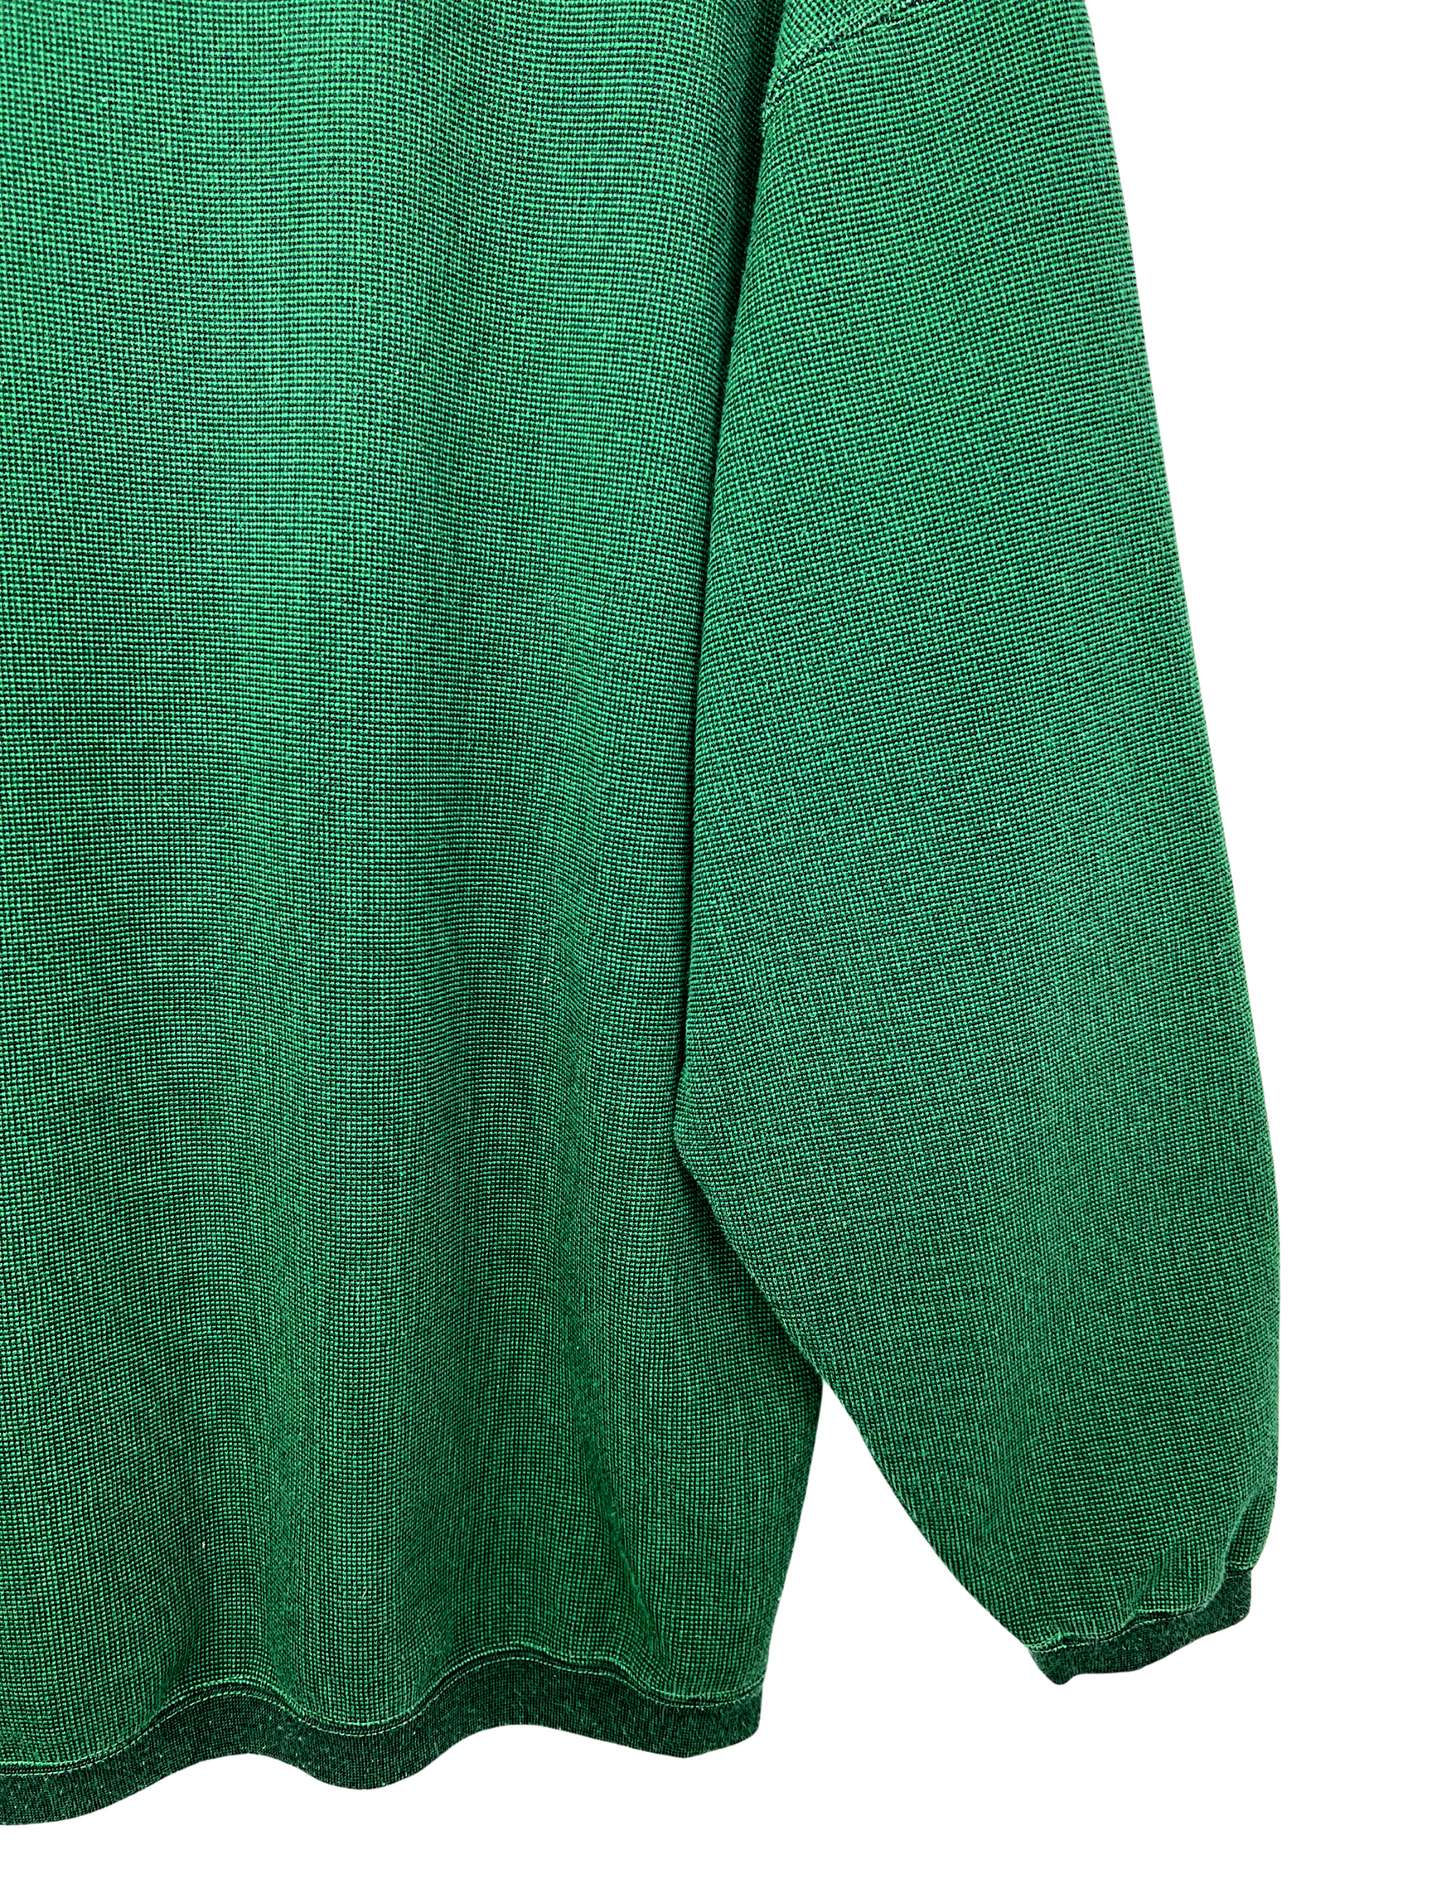 90’s Green Bay Packers Heavyweight Waffle Knit Sweatshirt